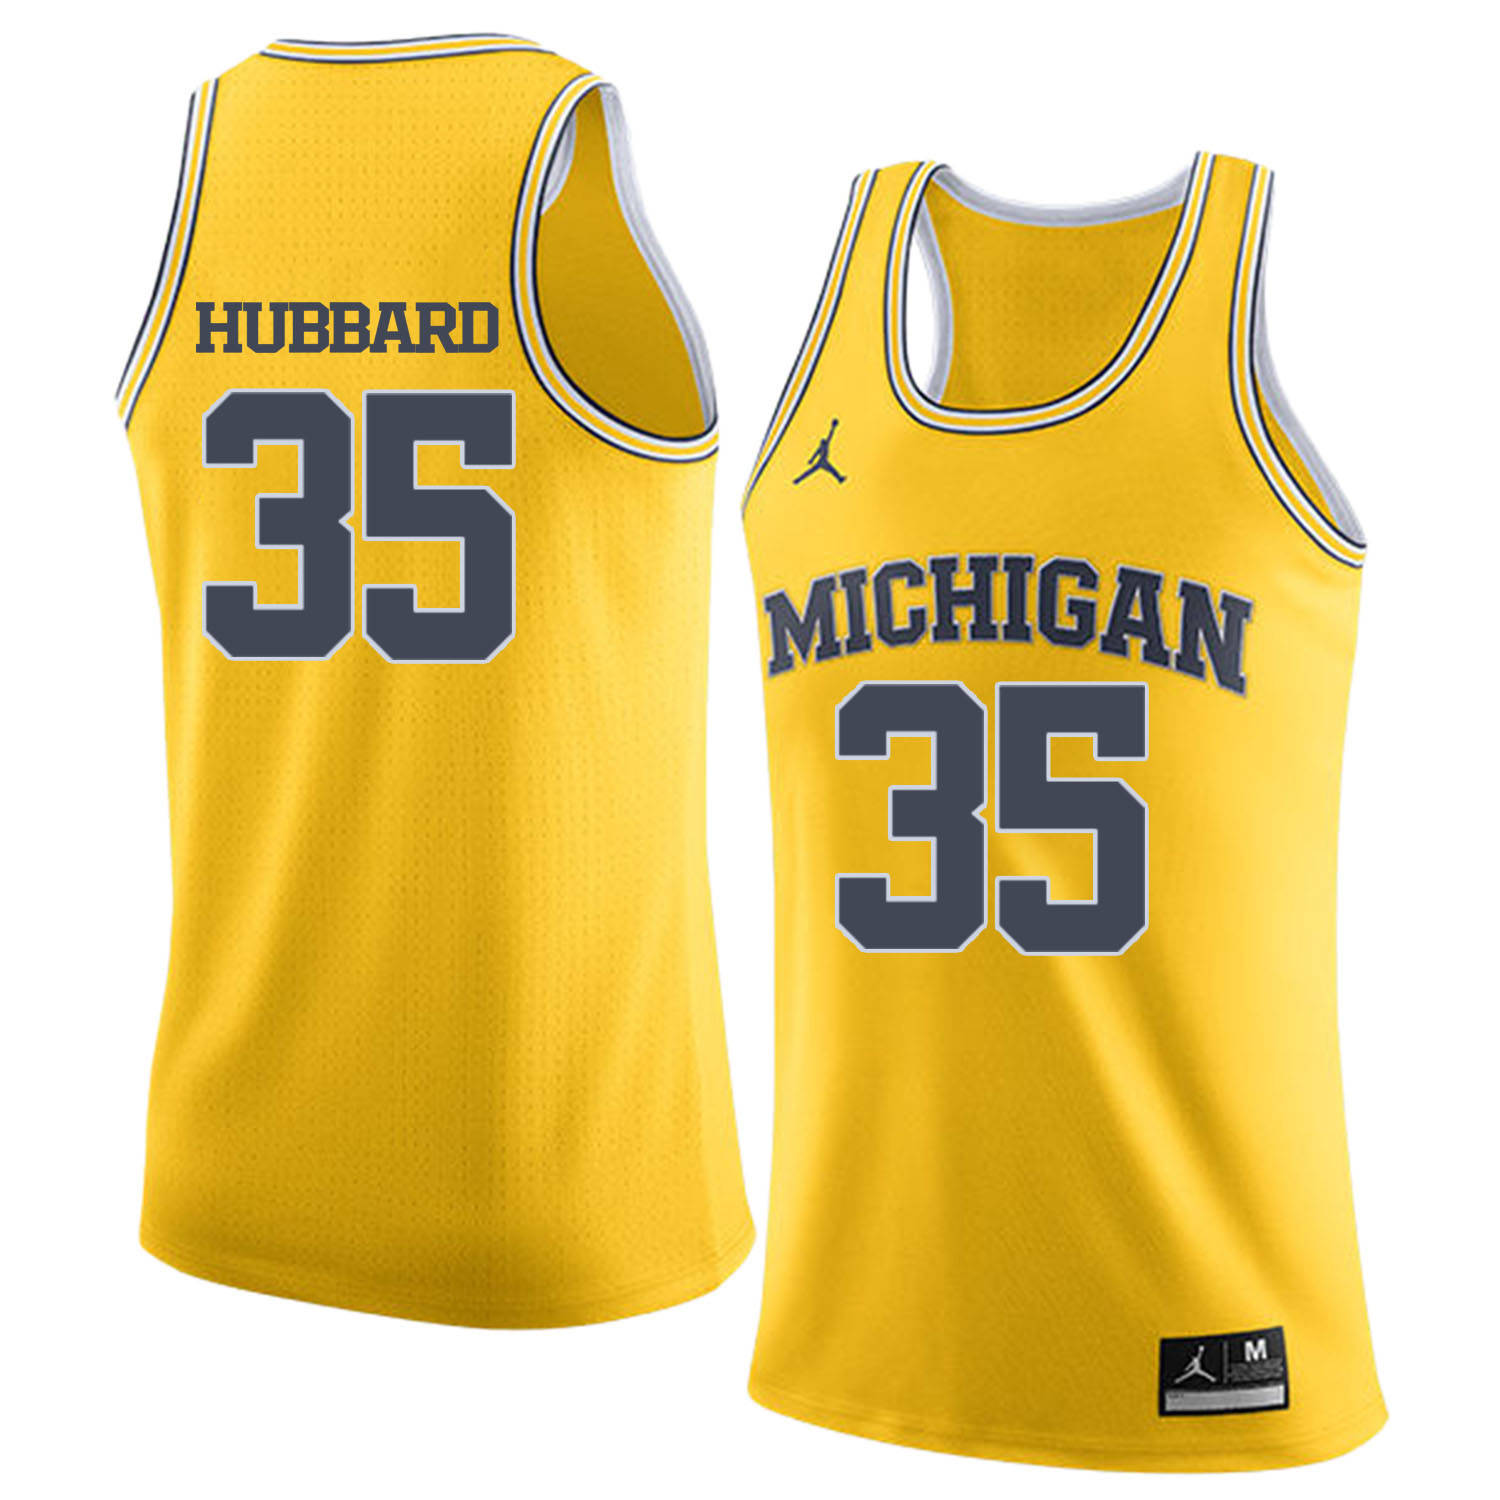 University of Michigan 35 Phil Hubbard Yellow College Basketball Jersey